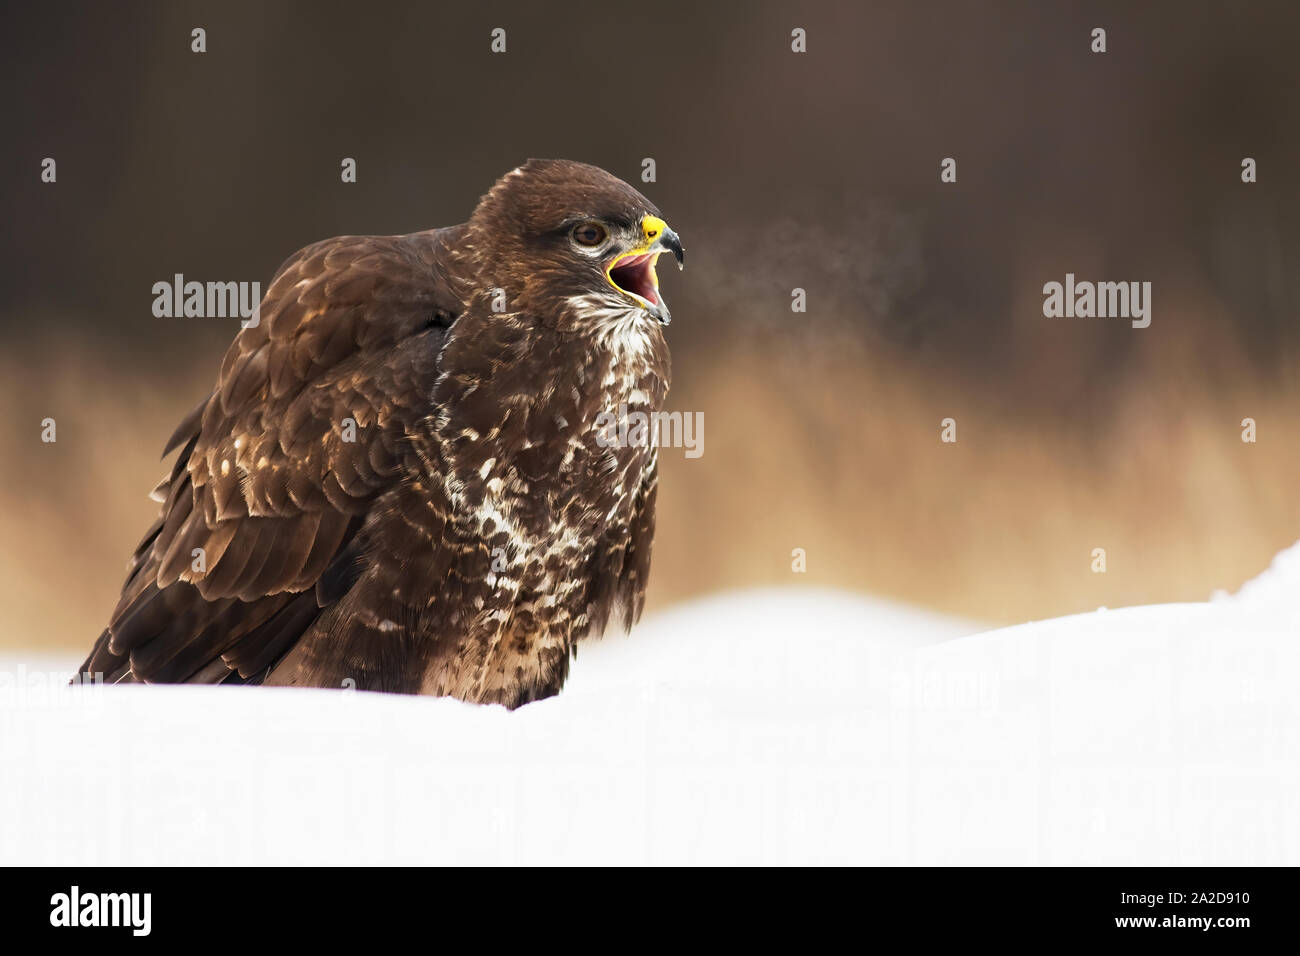 Wild common buzzard, buteo buteo, screeching with beak wide open while sitting on snow in wintertime. Fierce bird predator calling in wilderness. Anim Stock Photo